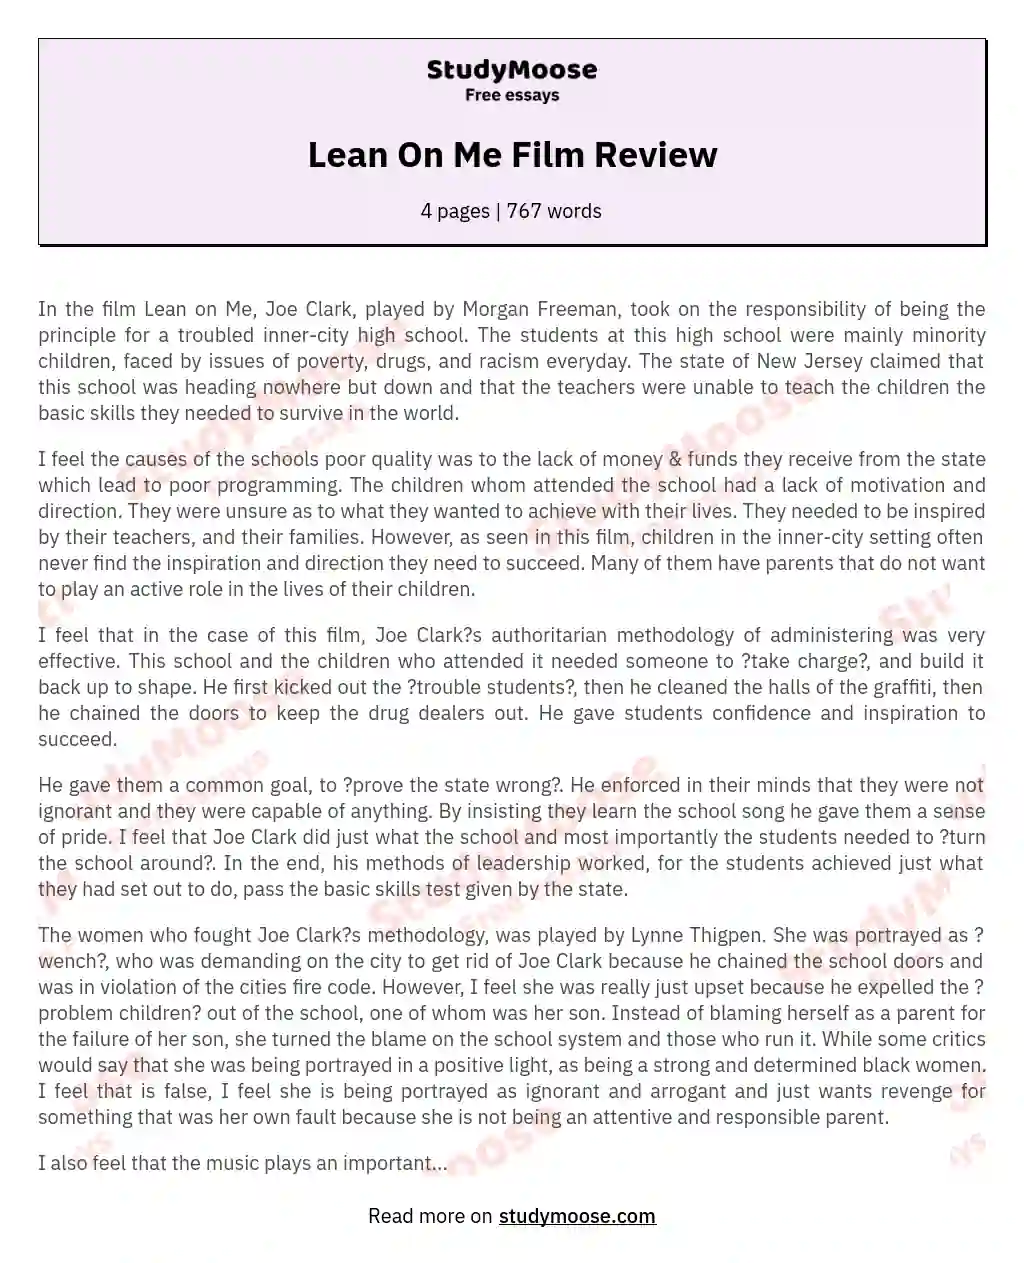 Lean On Me Film Review essay